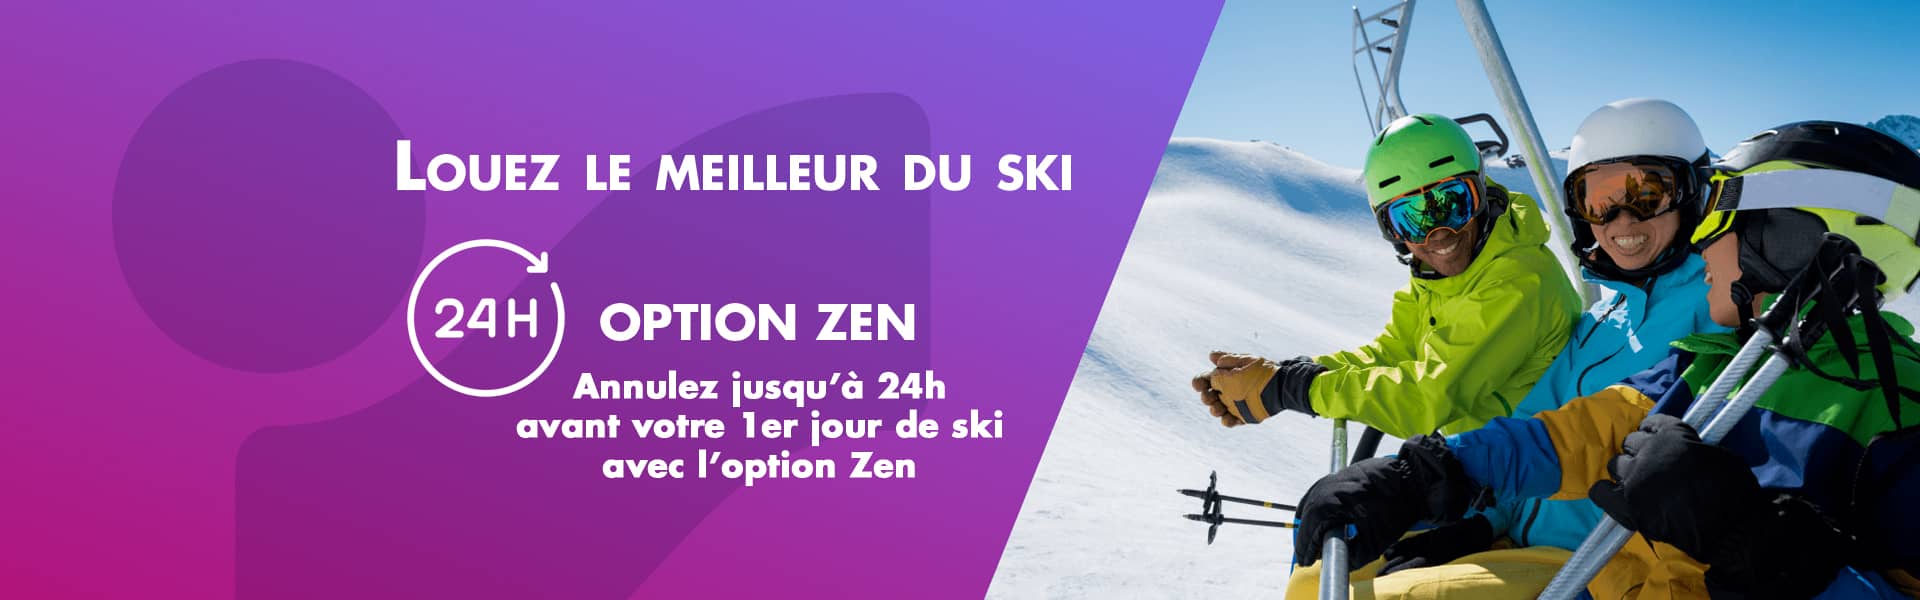 Ski Rental Les Arcs 1800 Chantel Edenarc Intersport